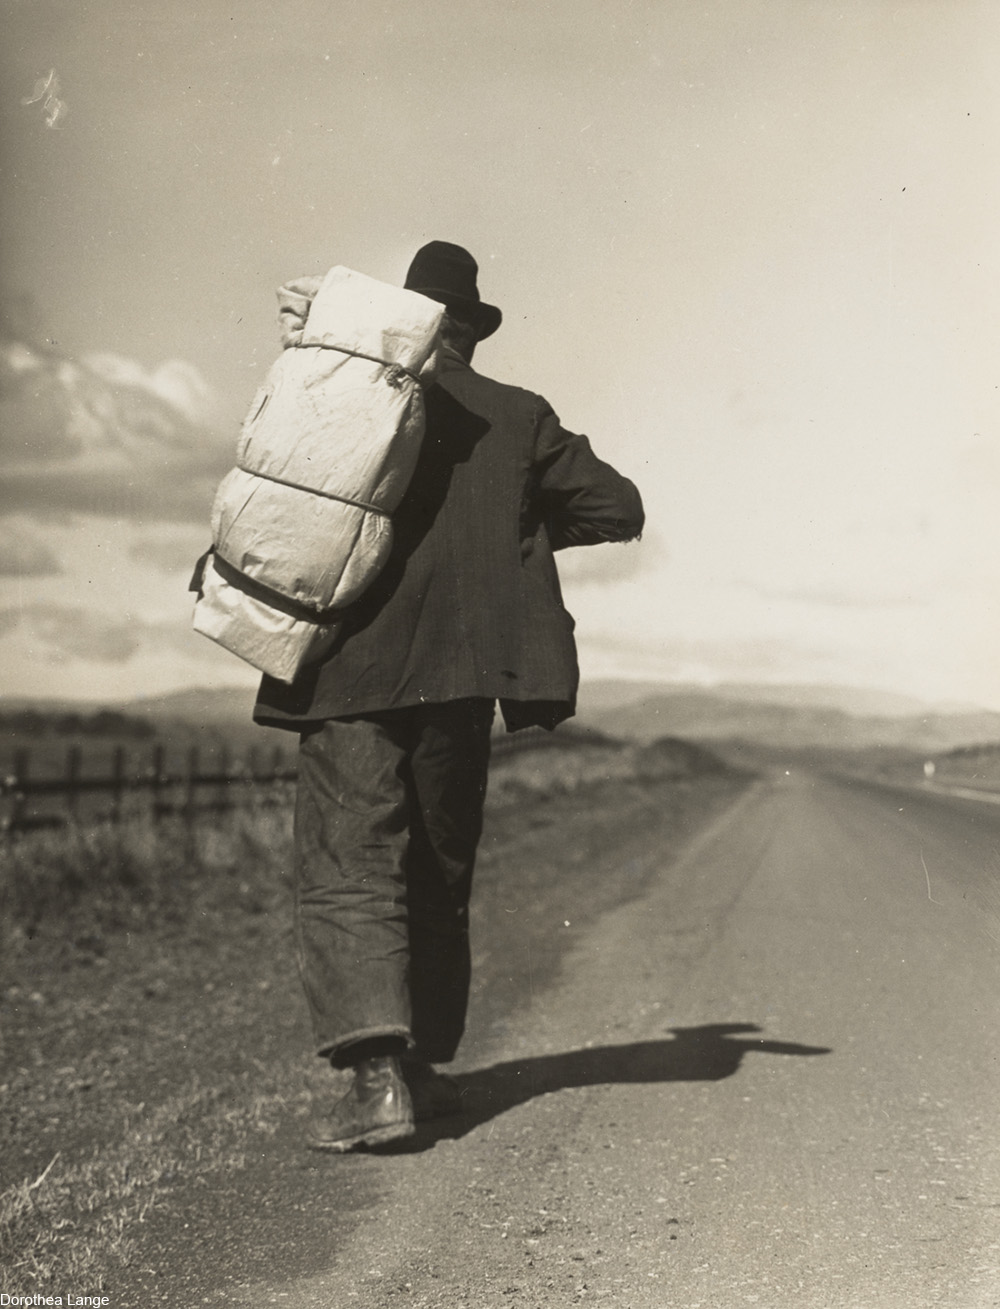 Migrant worker on California highway, 1935